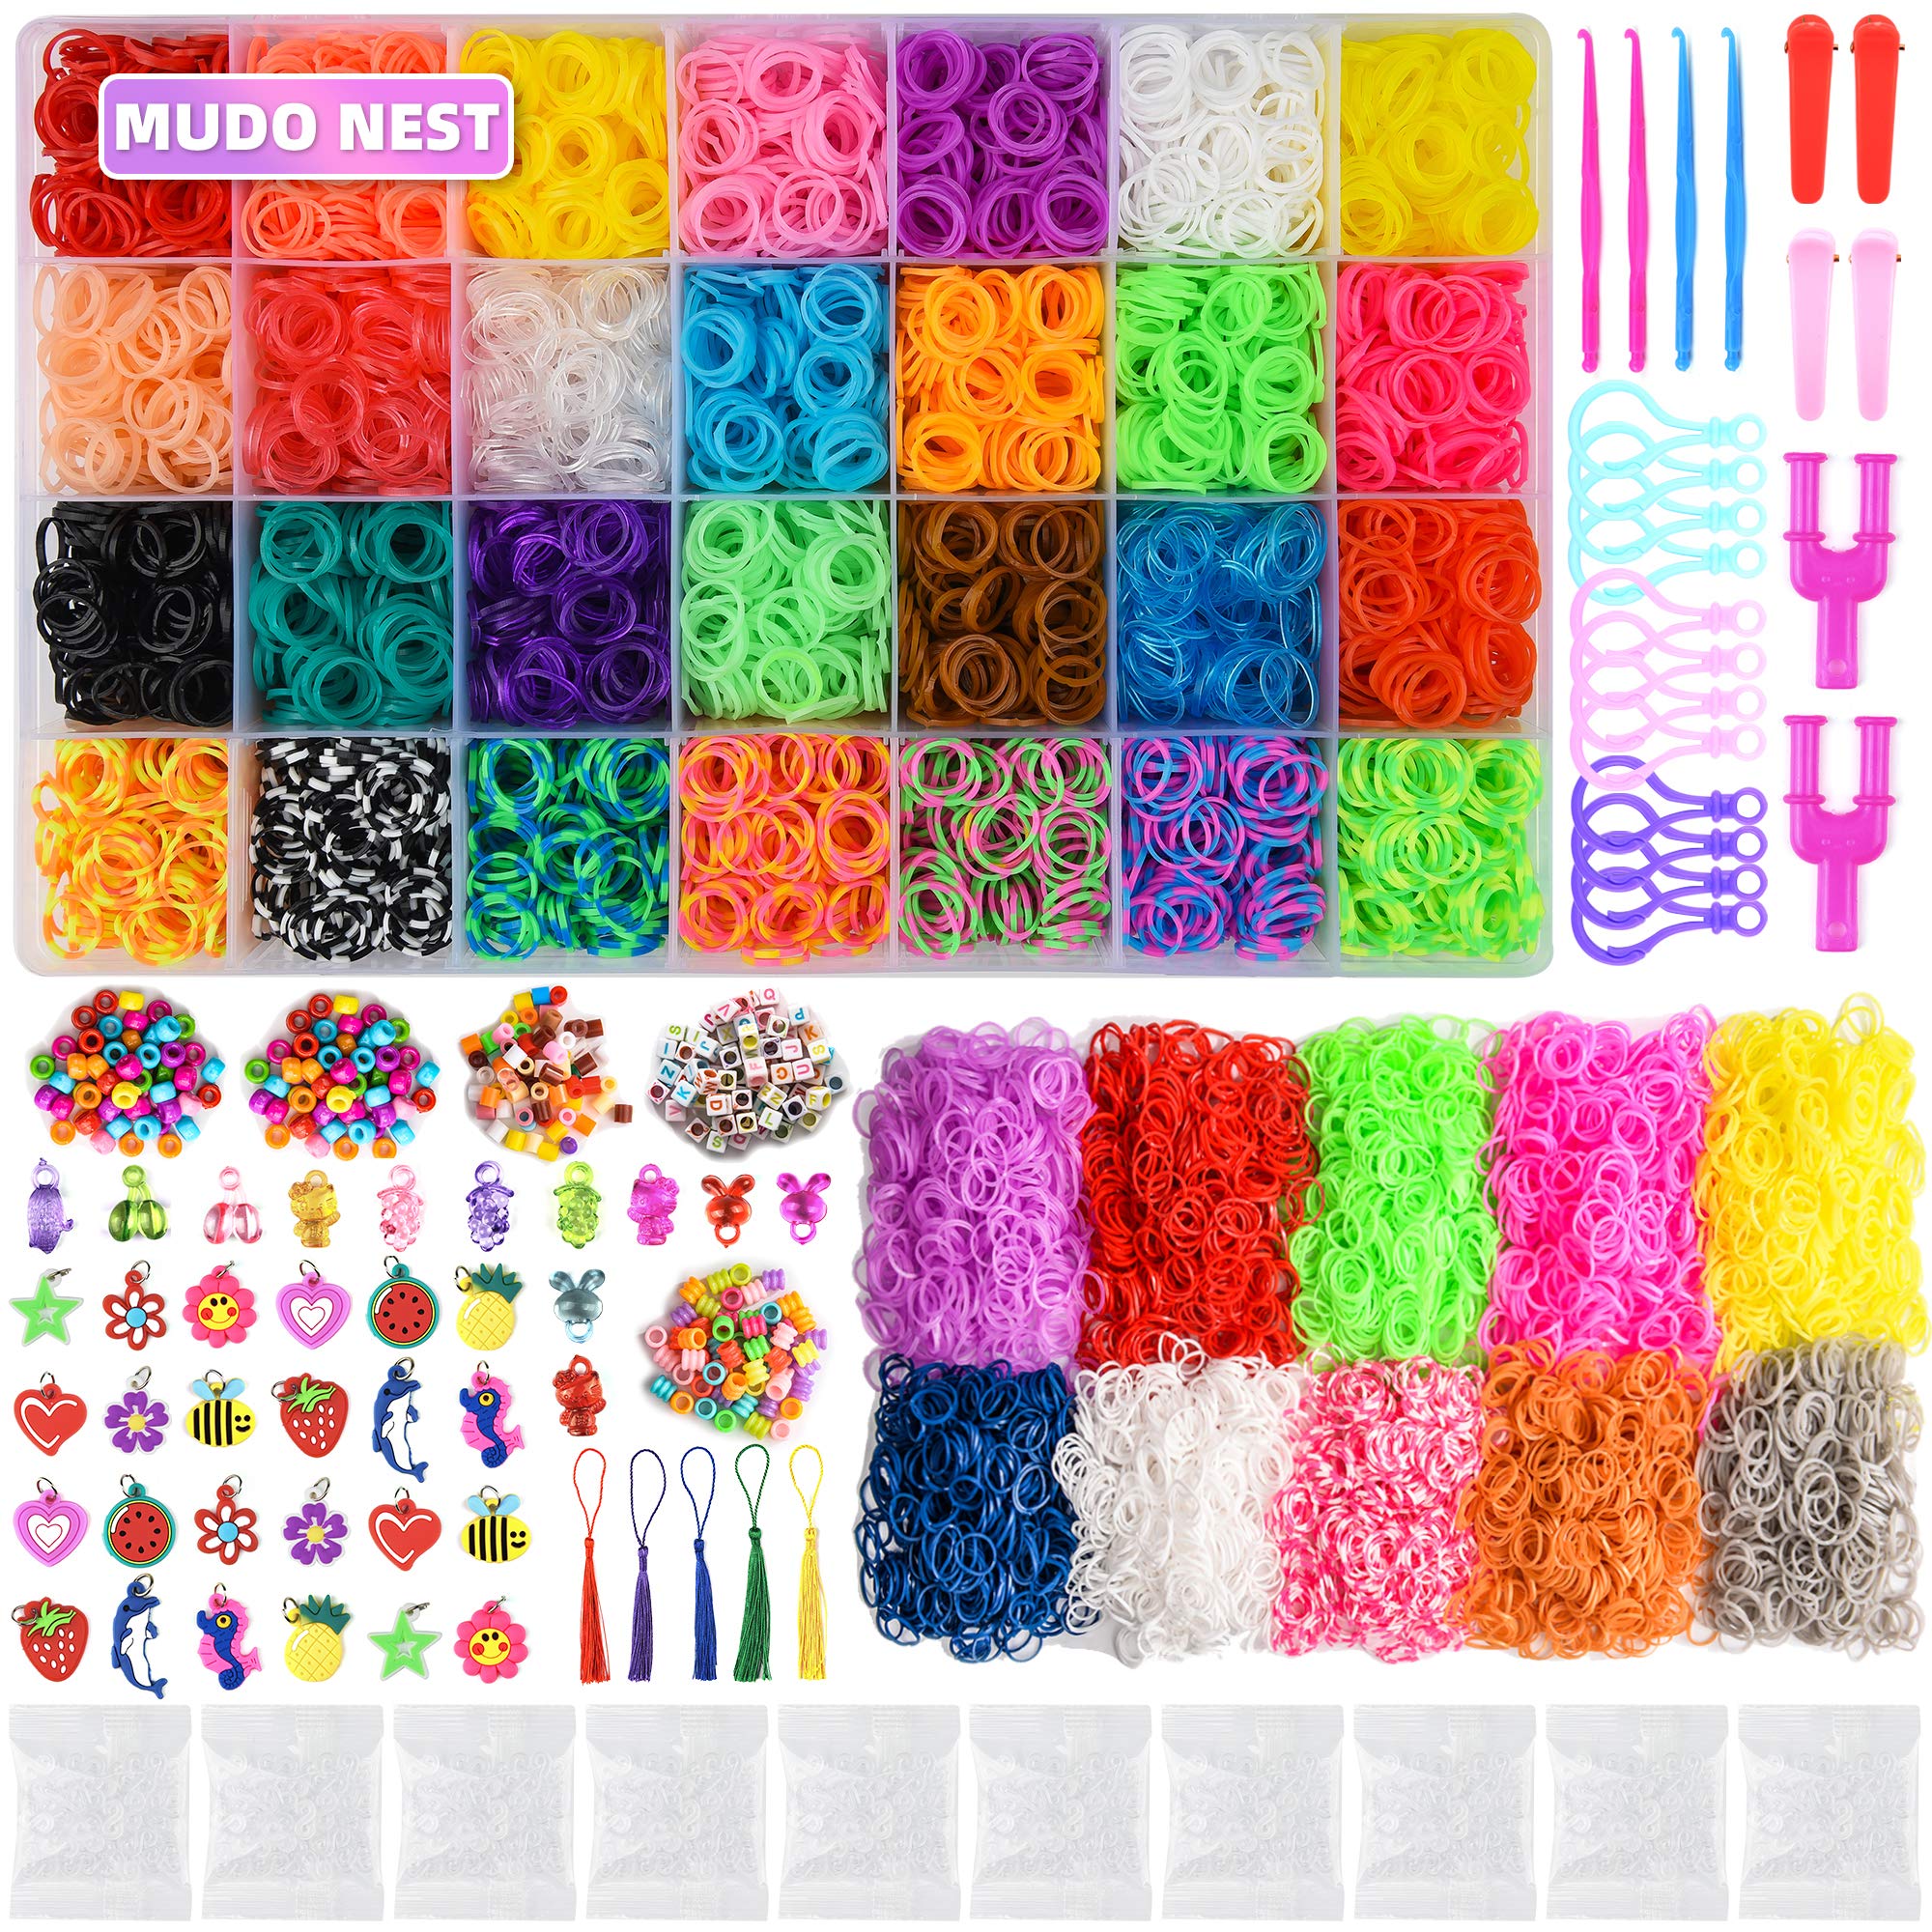 Rubber Band Bracelet Kit, Colorful Loom Bands, Rubber Band